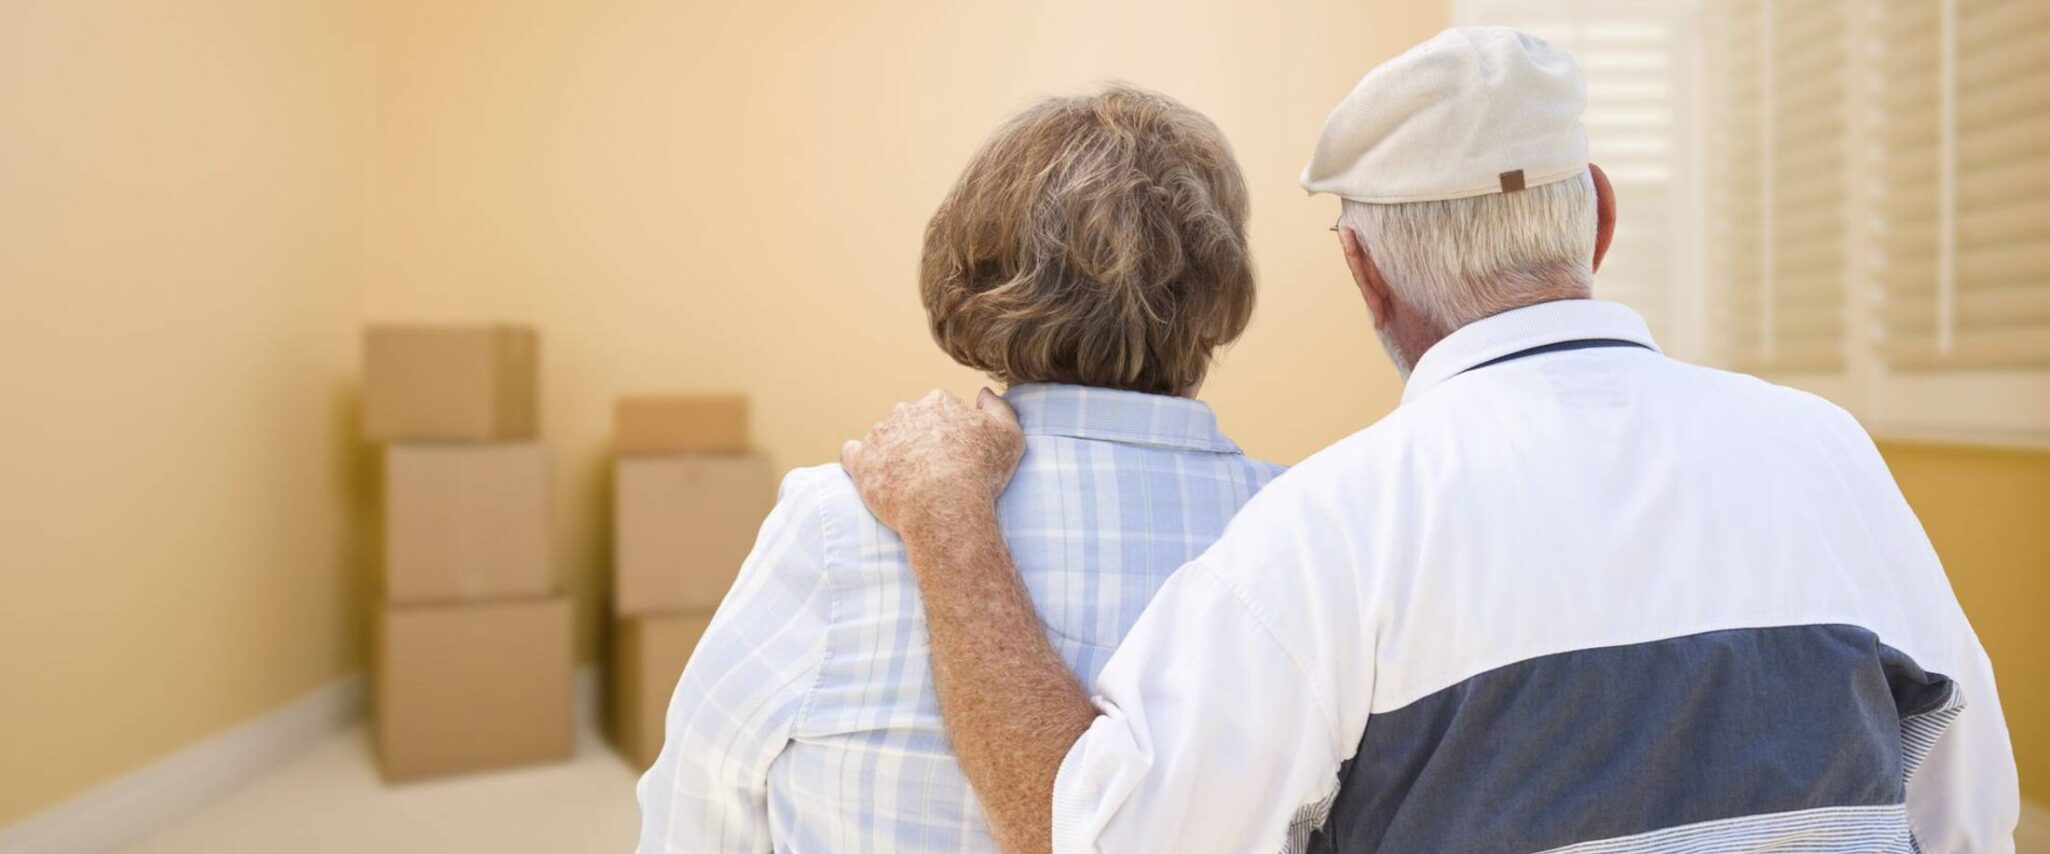 A senior man puts his arm around a senior woman as they begin to downsize to a senior apartment